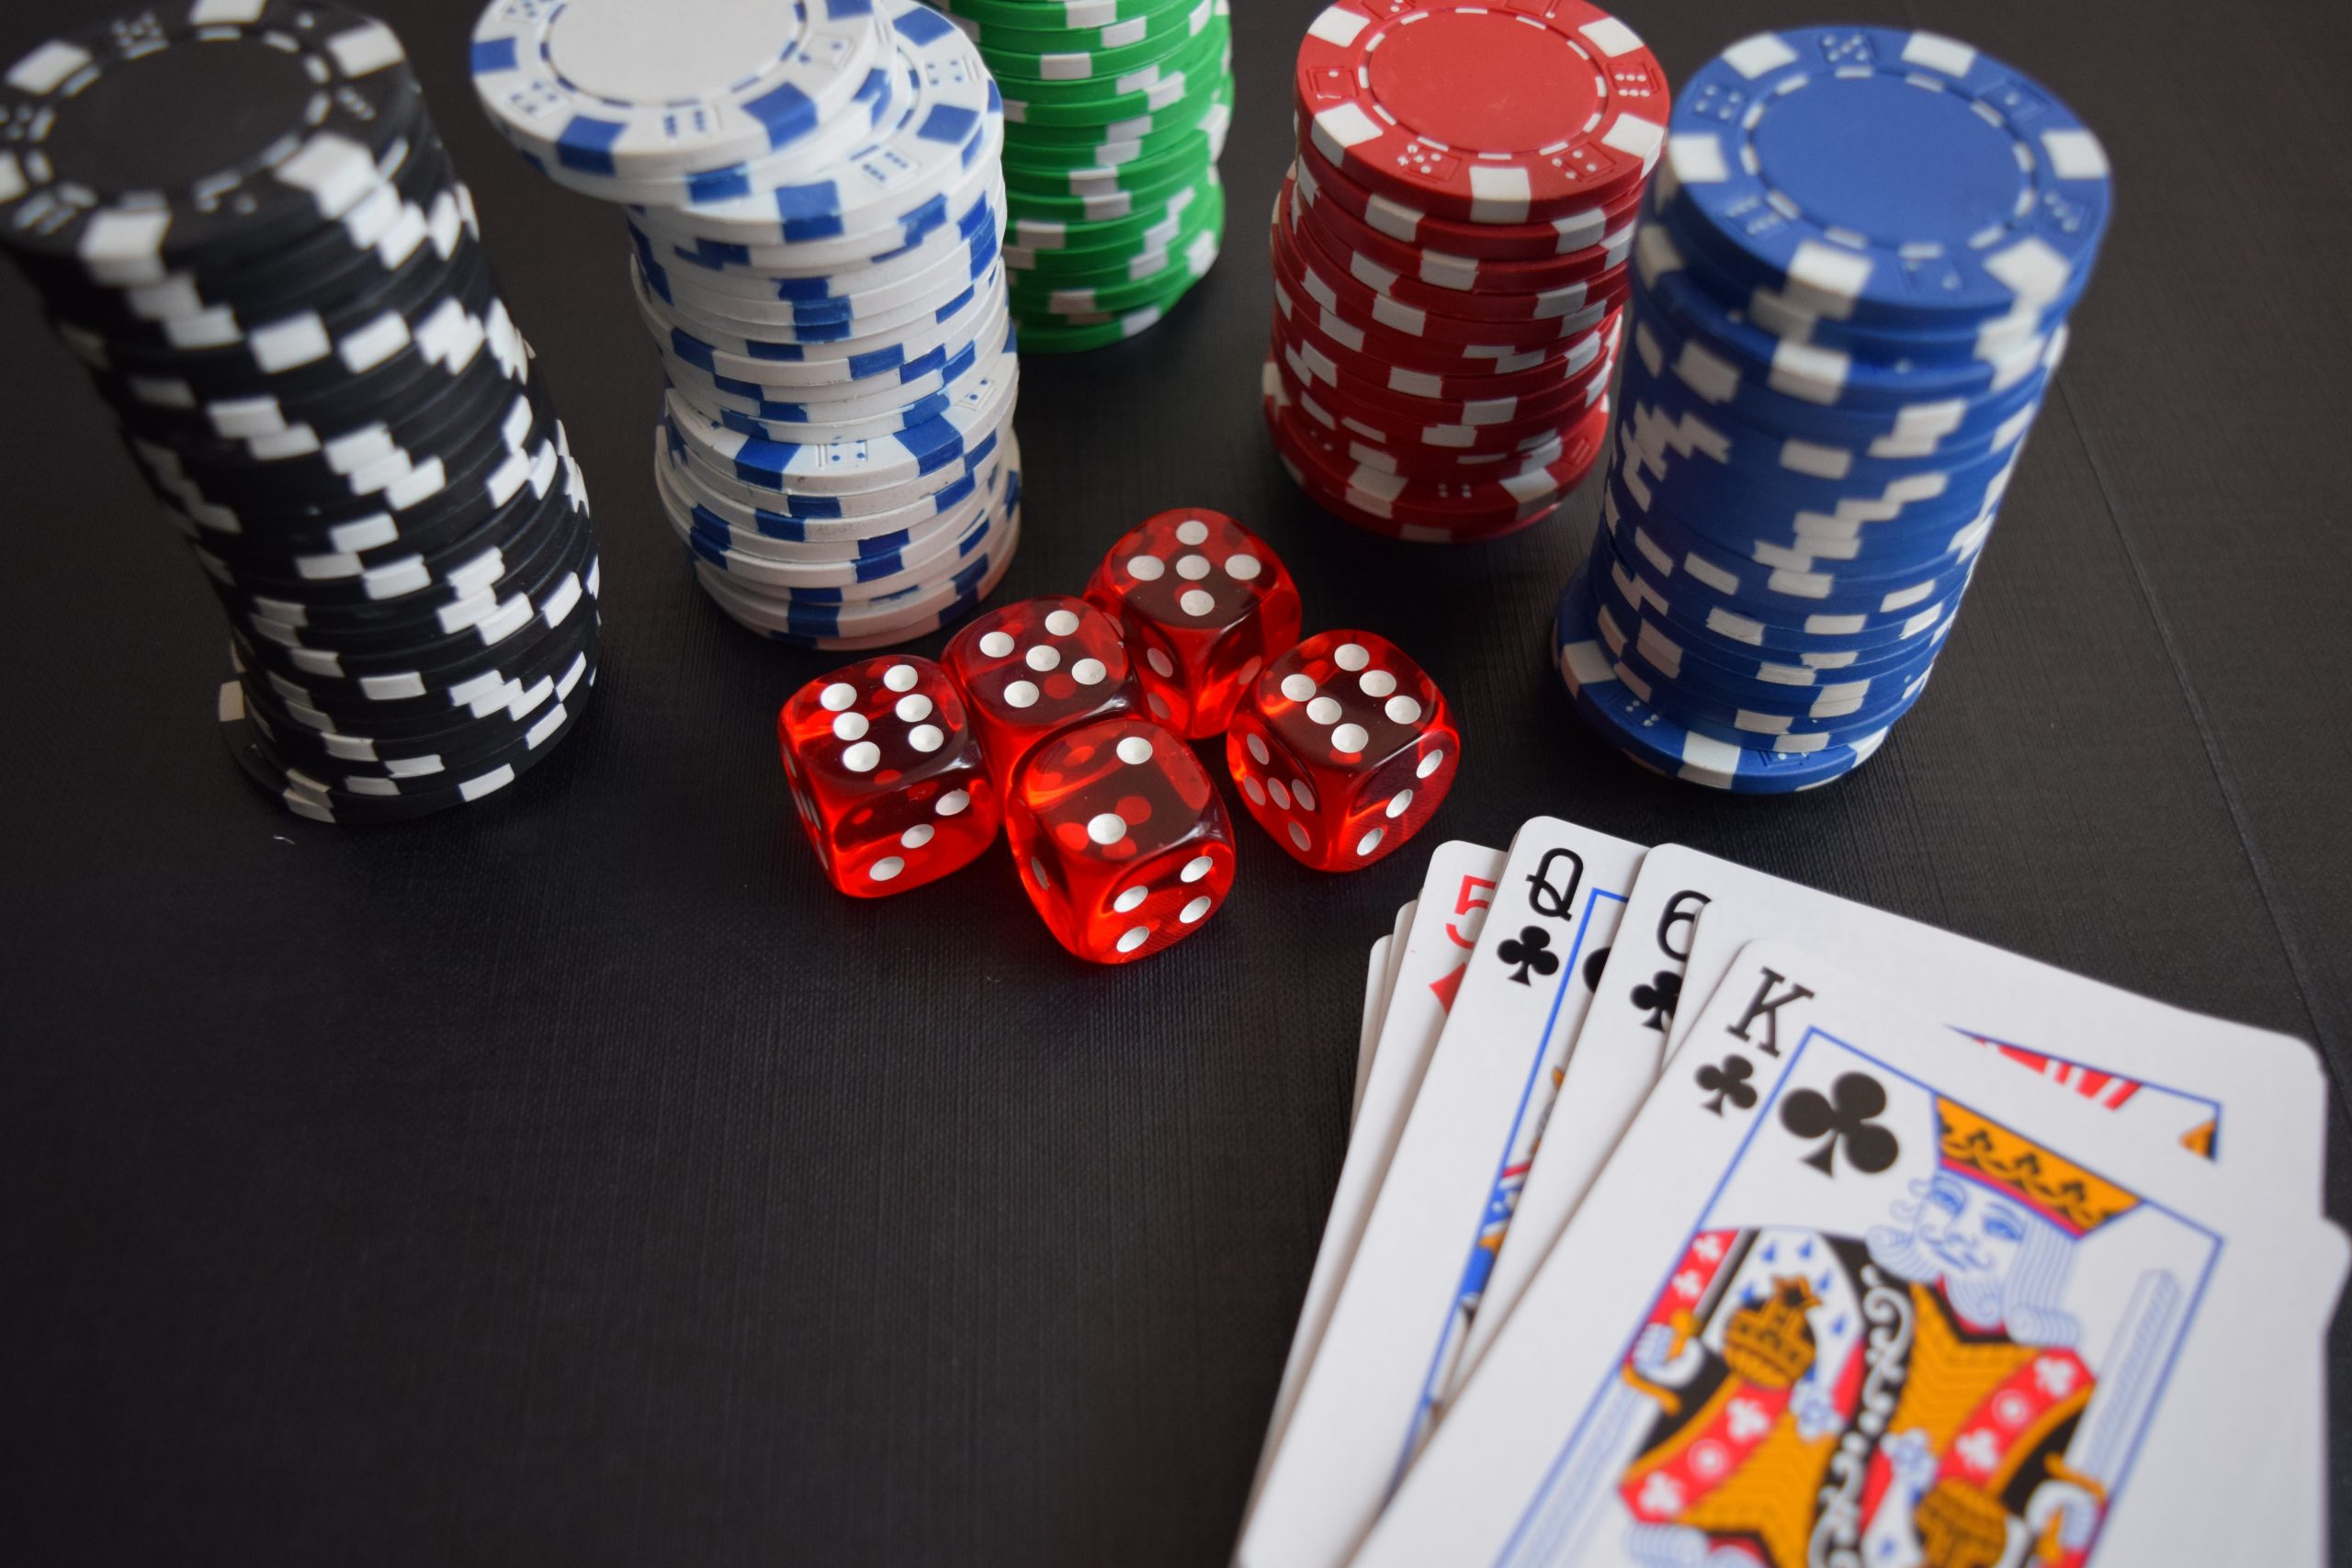 Key Factors Customers Look for When Choosing an Online Casino